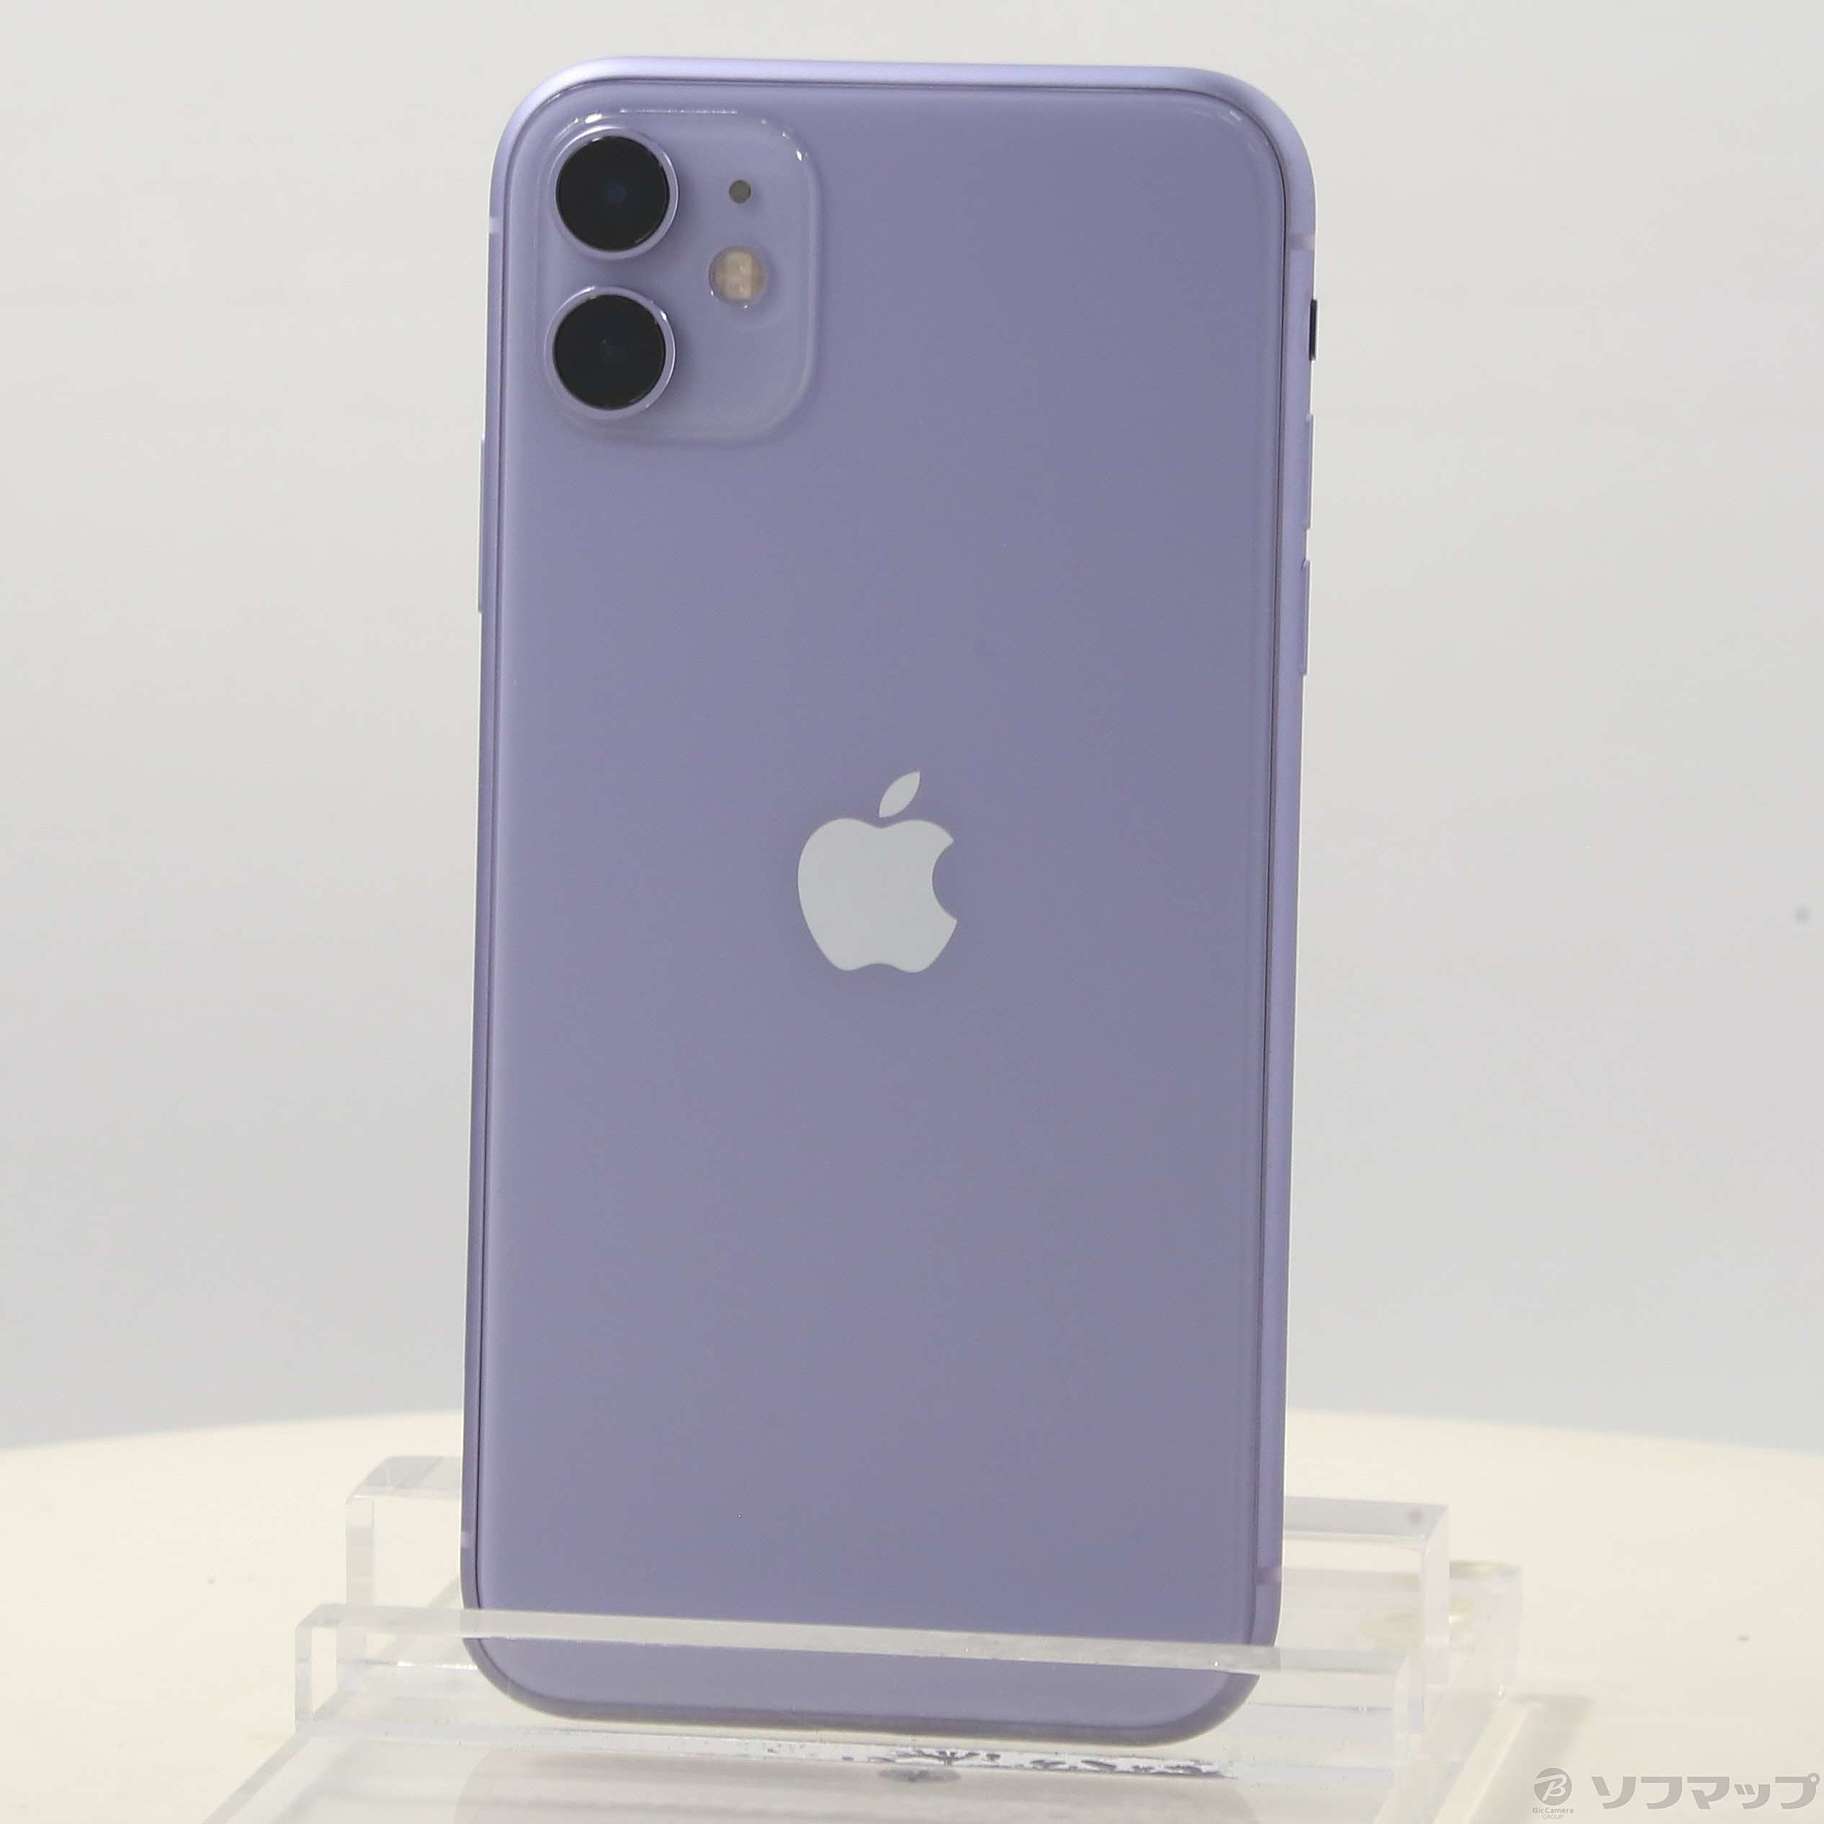 iPhone11 パープル 紫 64GB シムフリー - sorbillomenu.com